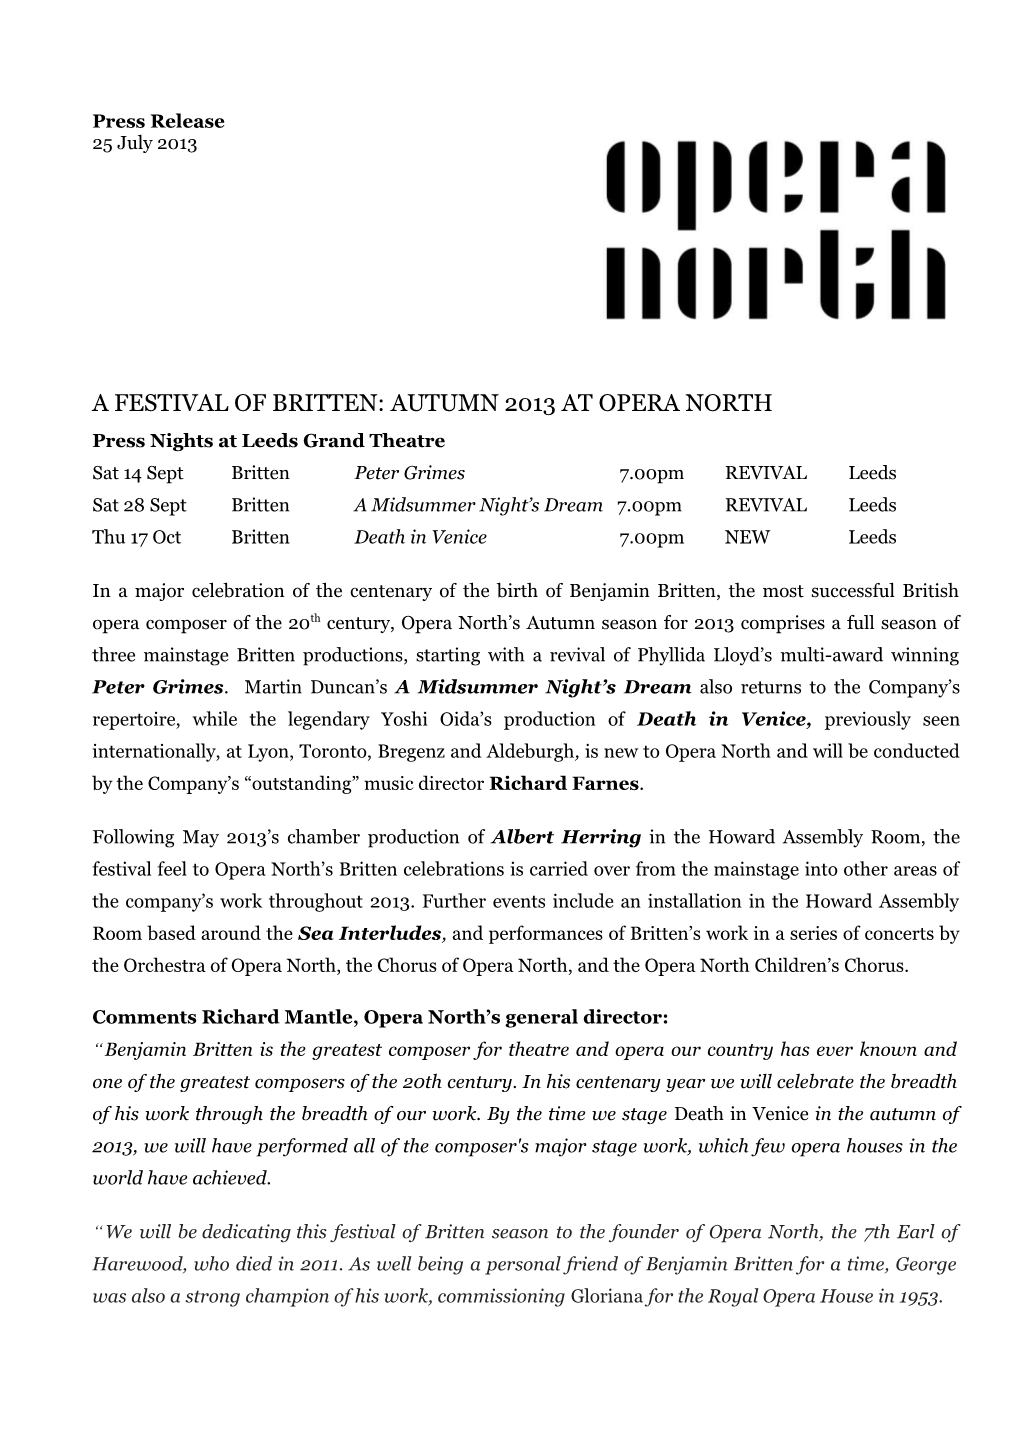 A Festival of Britten: Autumn 2013 at Opera North